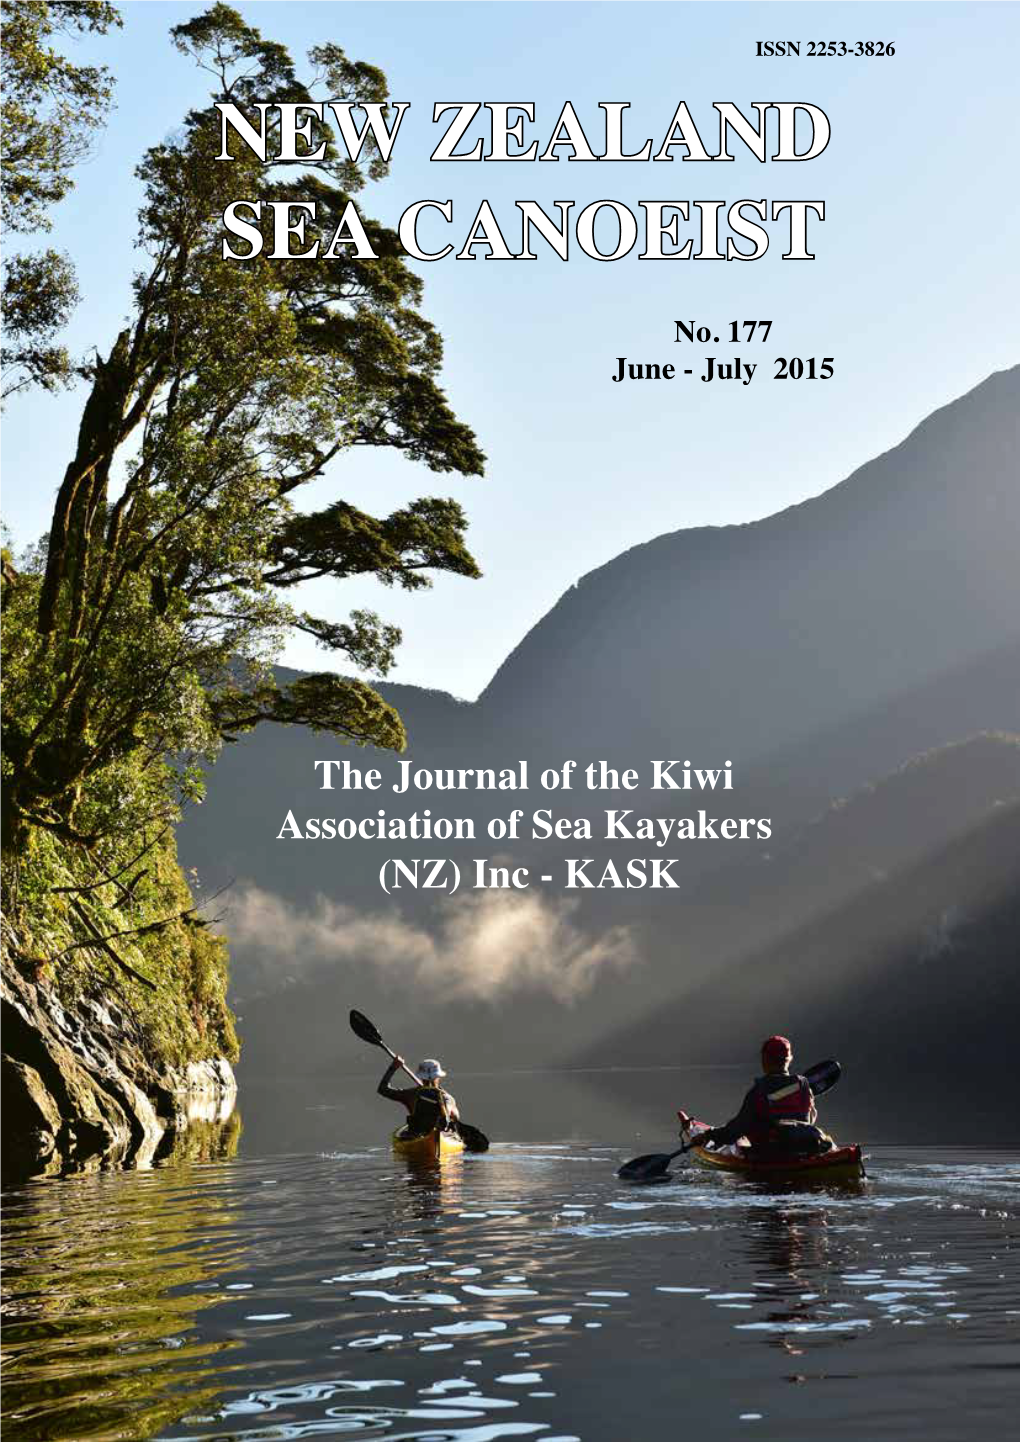 Sea Canoeist Newsletter